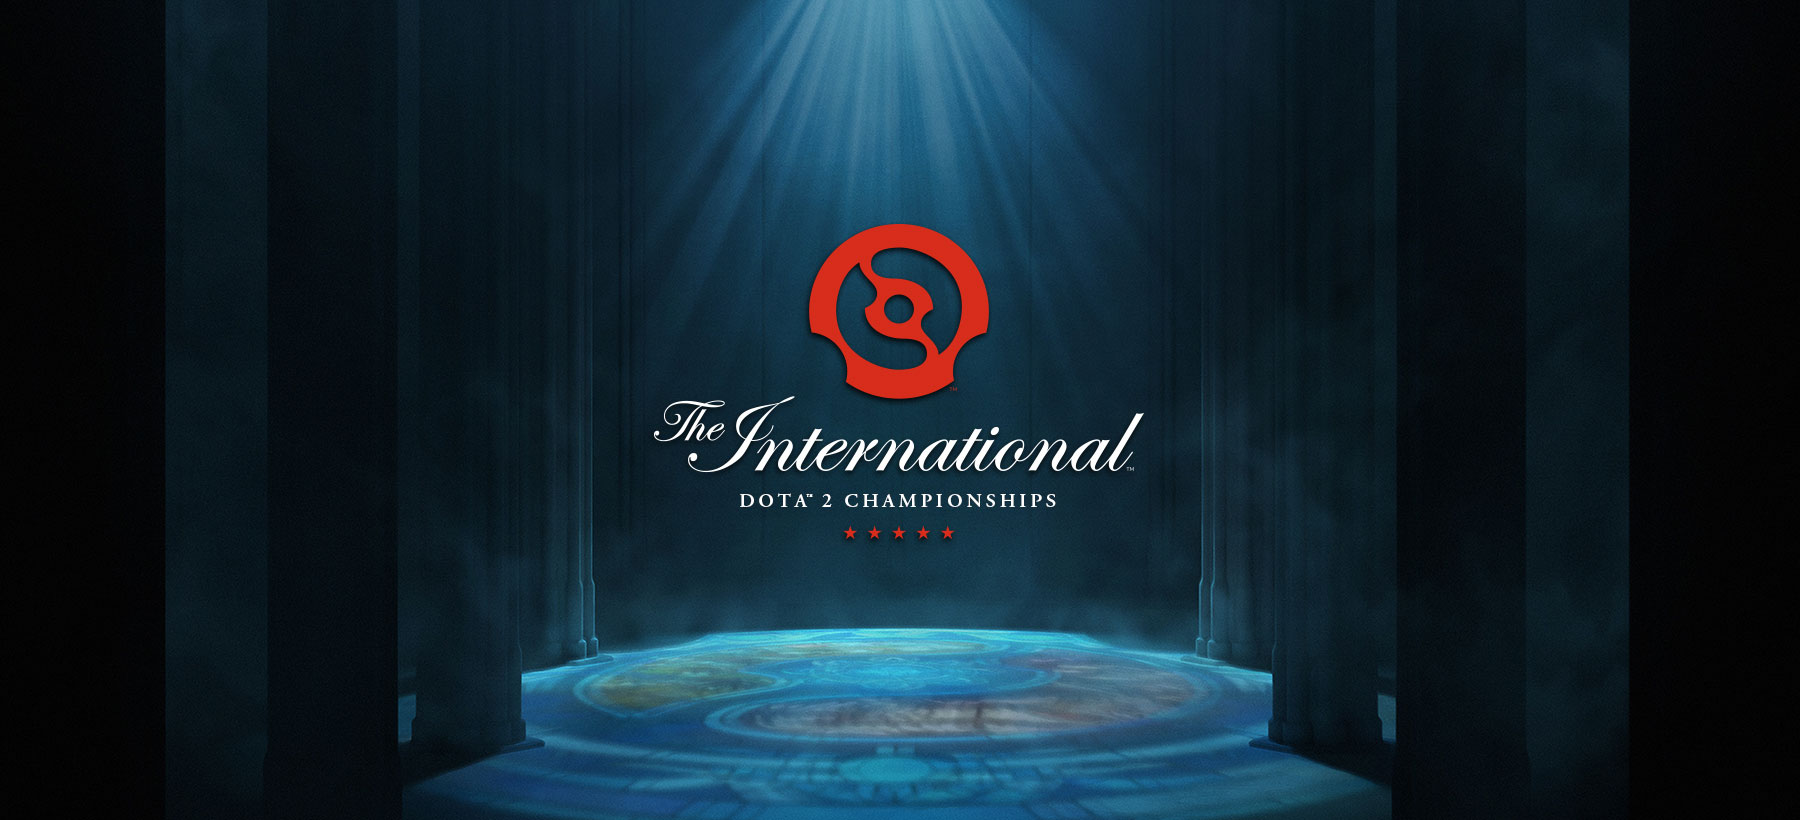 DOTA 2 The International: Championships